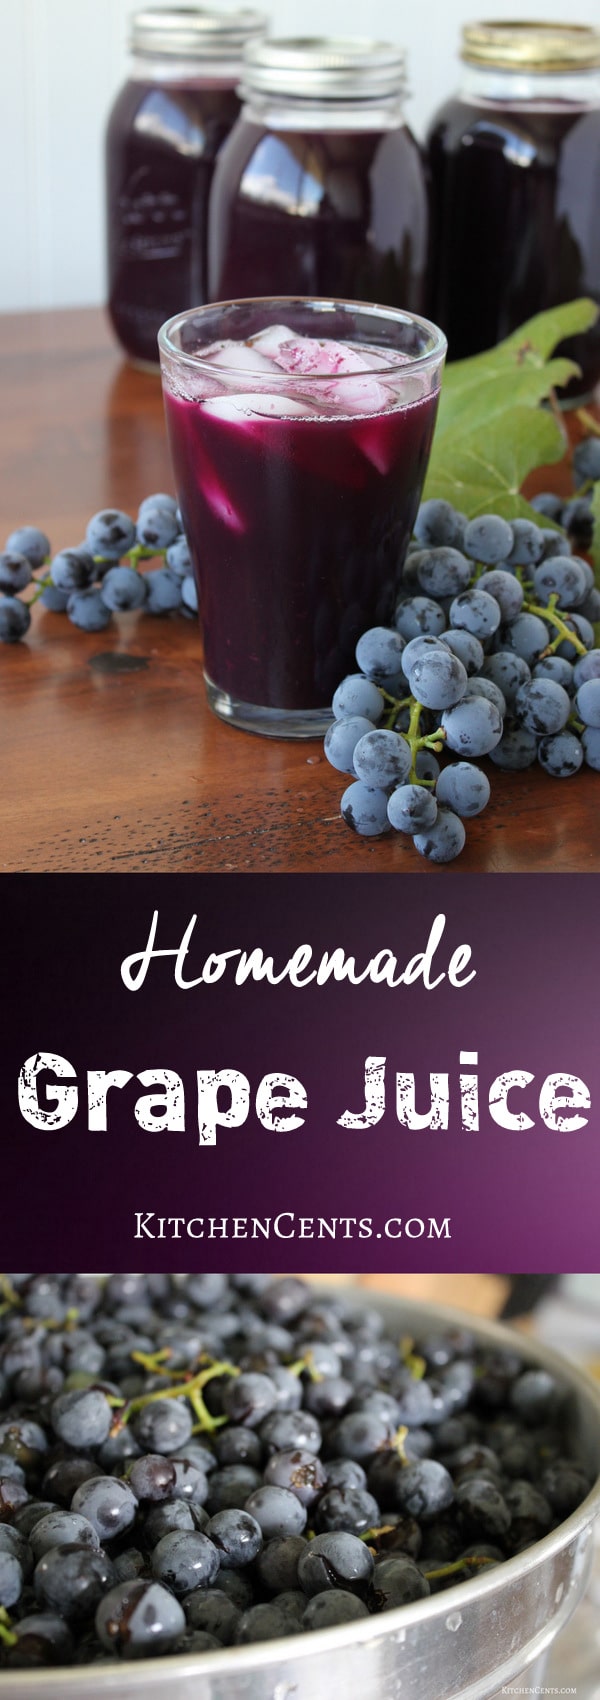 homemade-grape-juice | KitchenCents.com